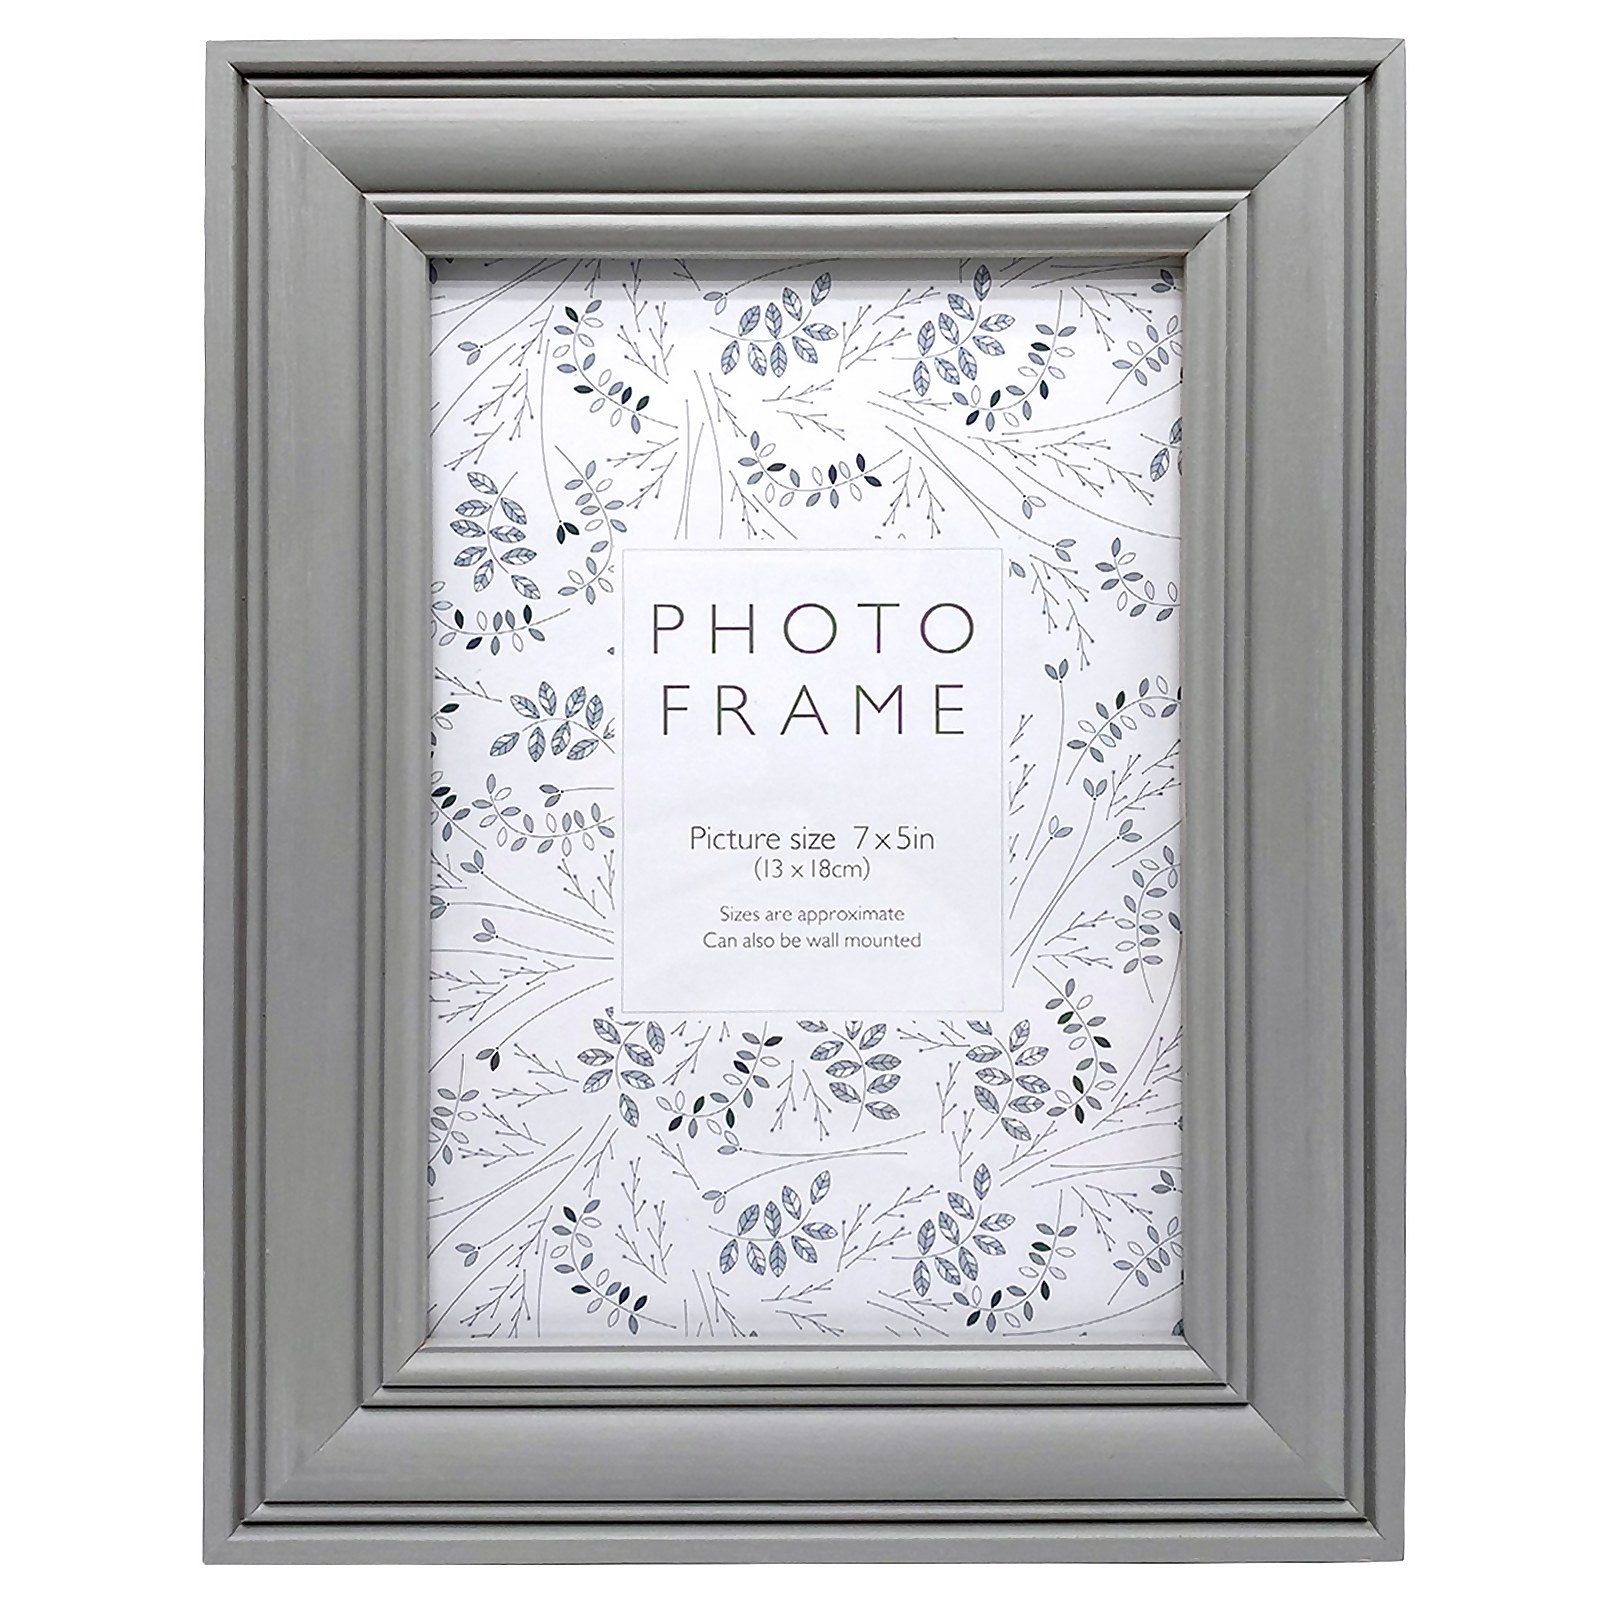 Photo of Vintage Photo Frame 7x5 - Grey